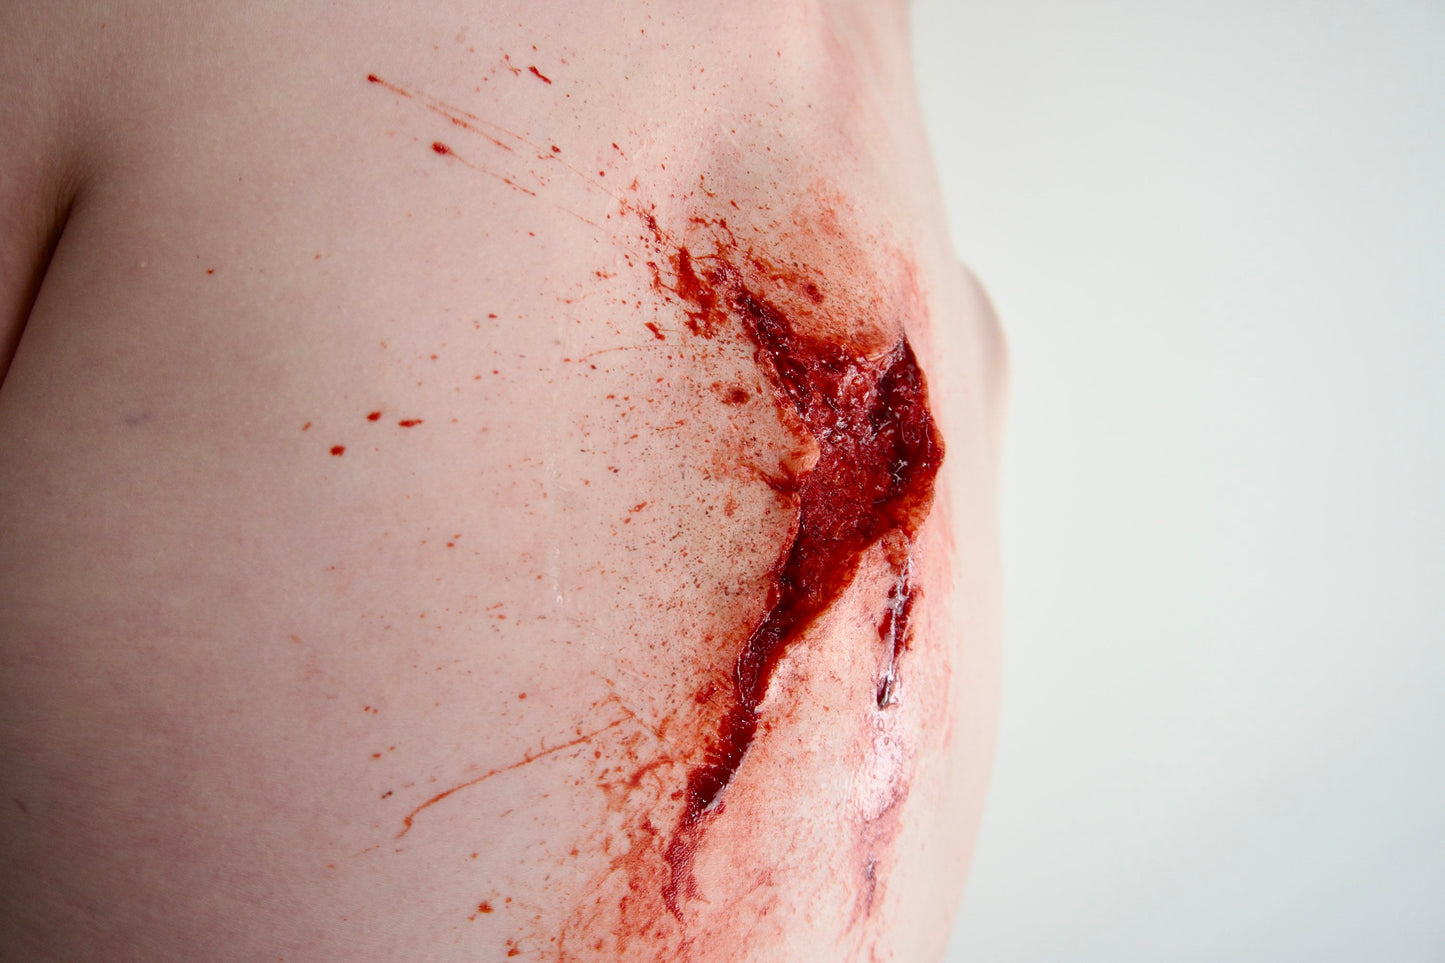 gunshot wound - entrance gun - exit shotgun wound - bullet hole